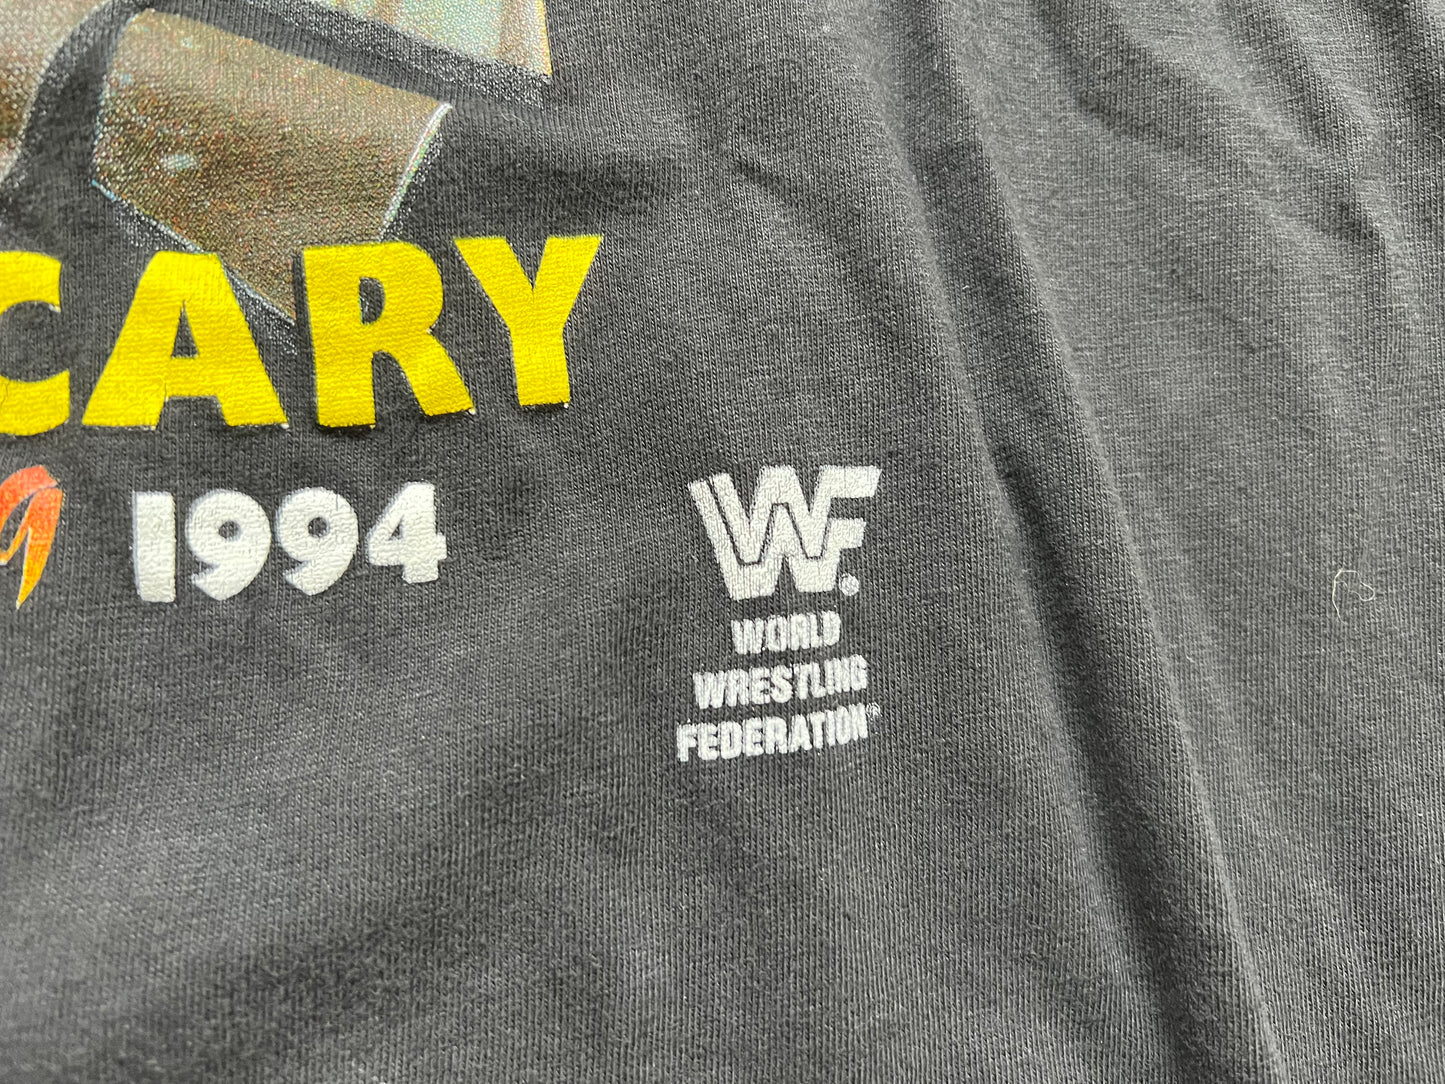 1994 WWF Summerslam shirt featuring Shoot Undertaker and fake Undertaker